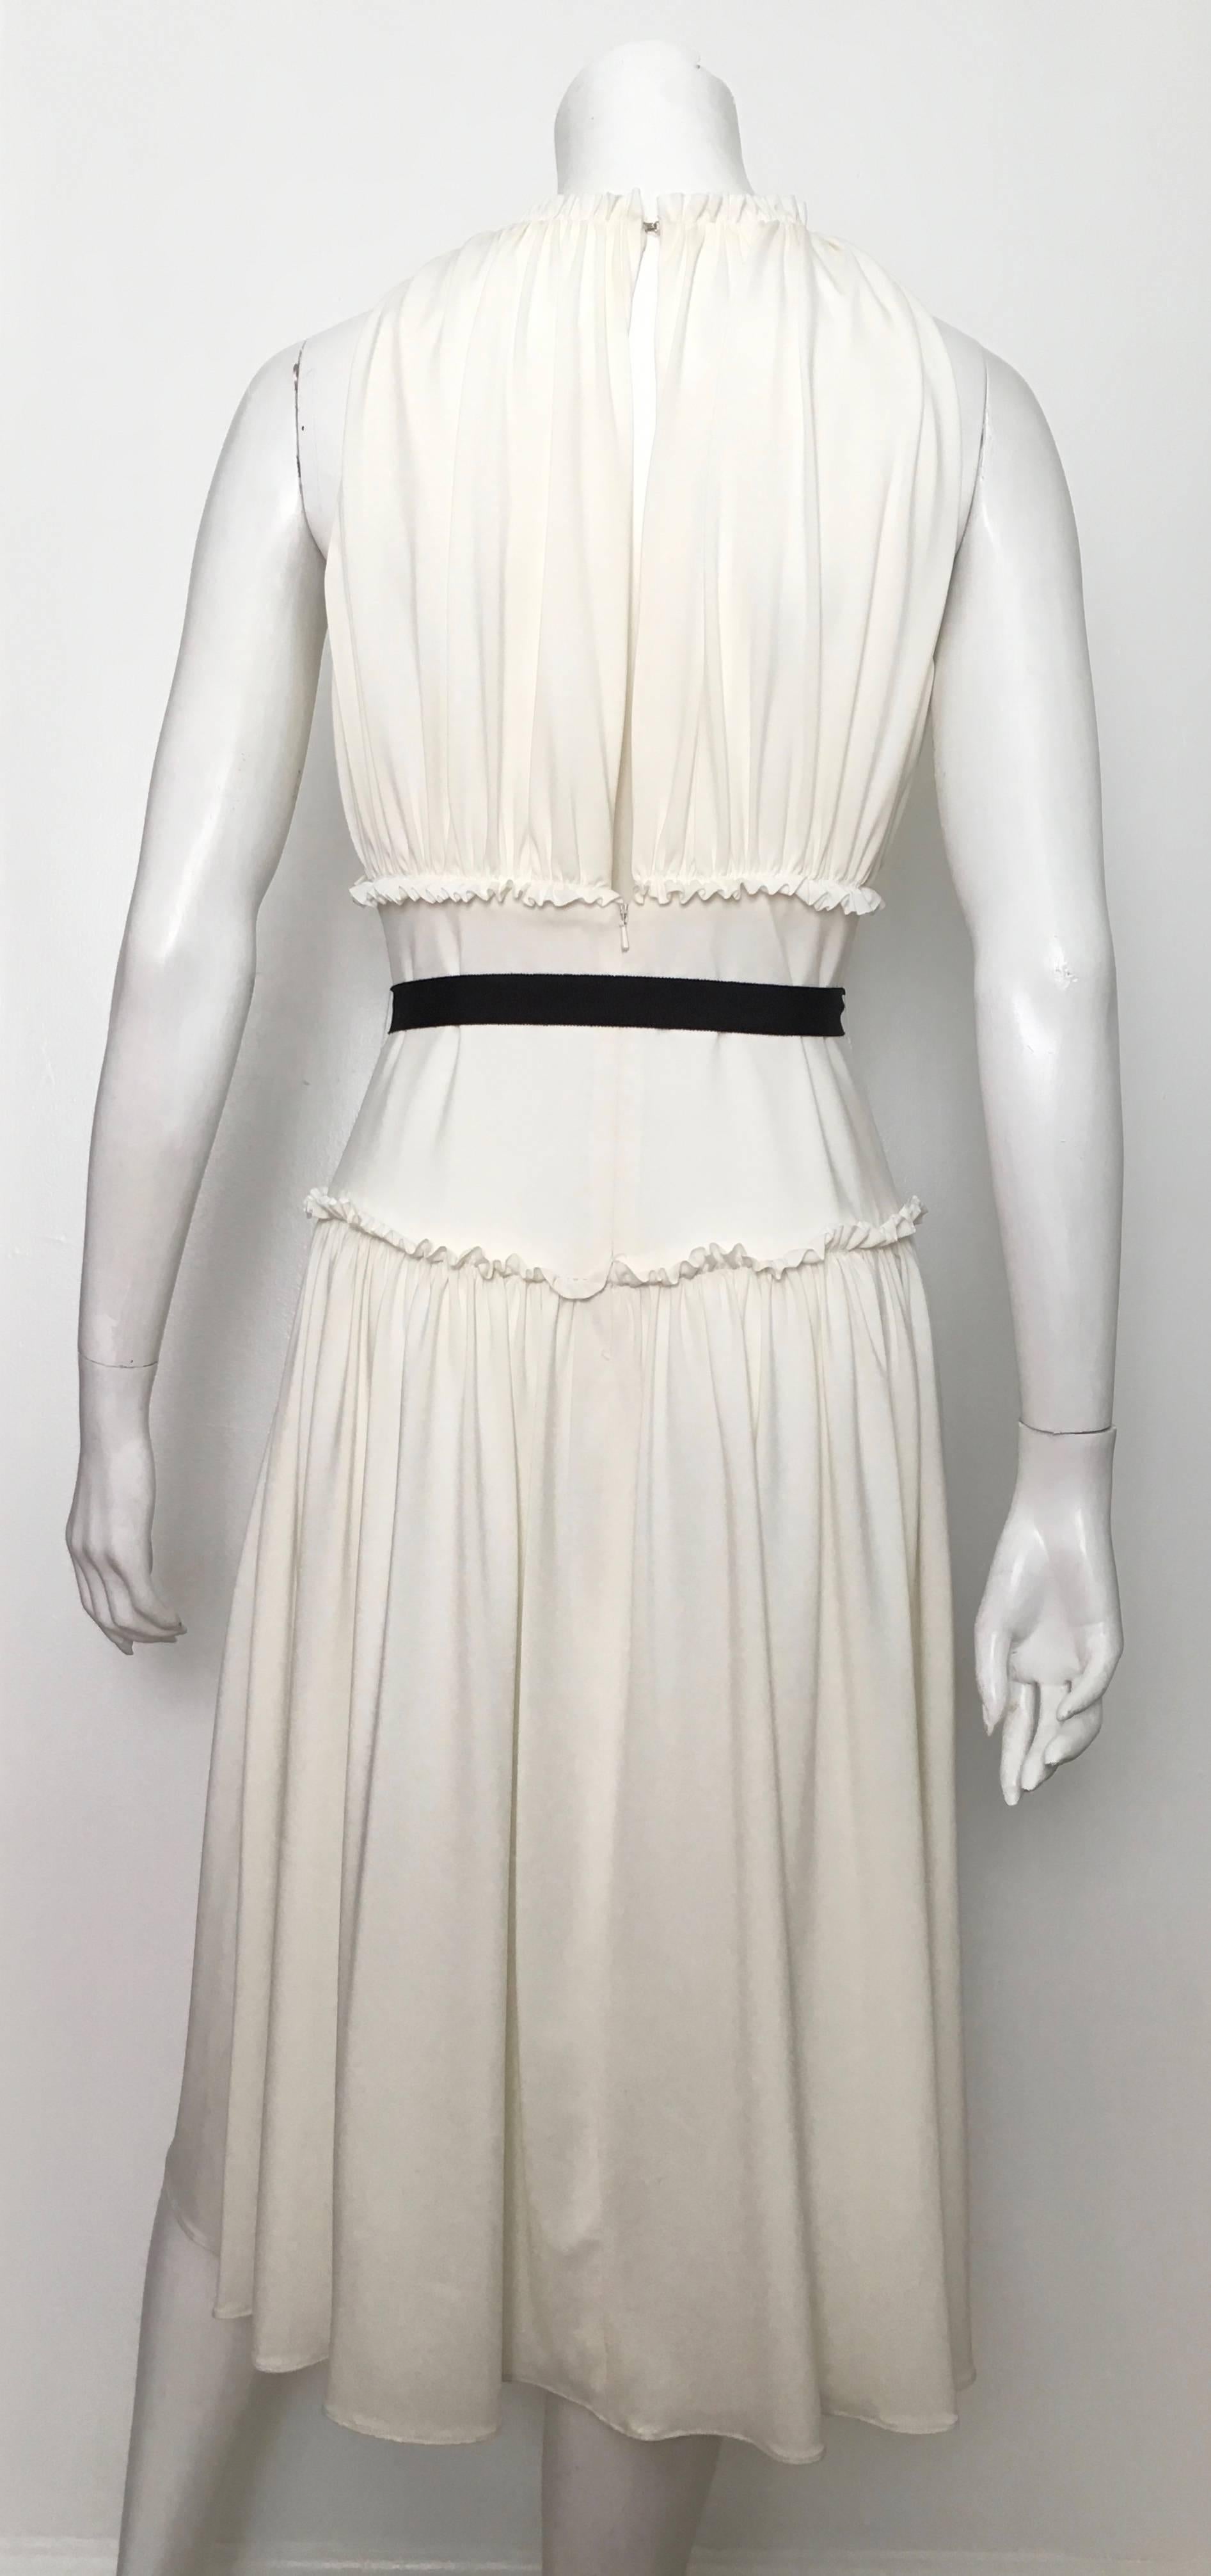 Women's Vera Wang 1990s White Jersey Sleeveless Dress Size 8. For Sale